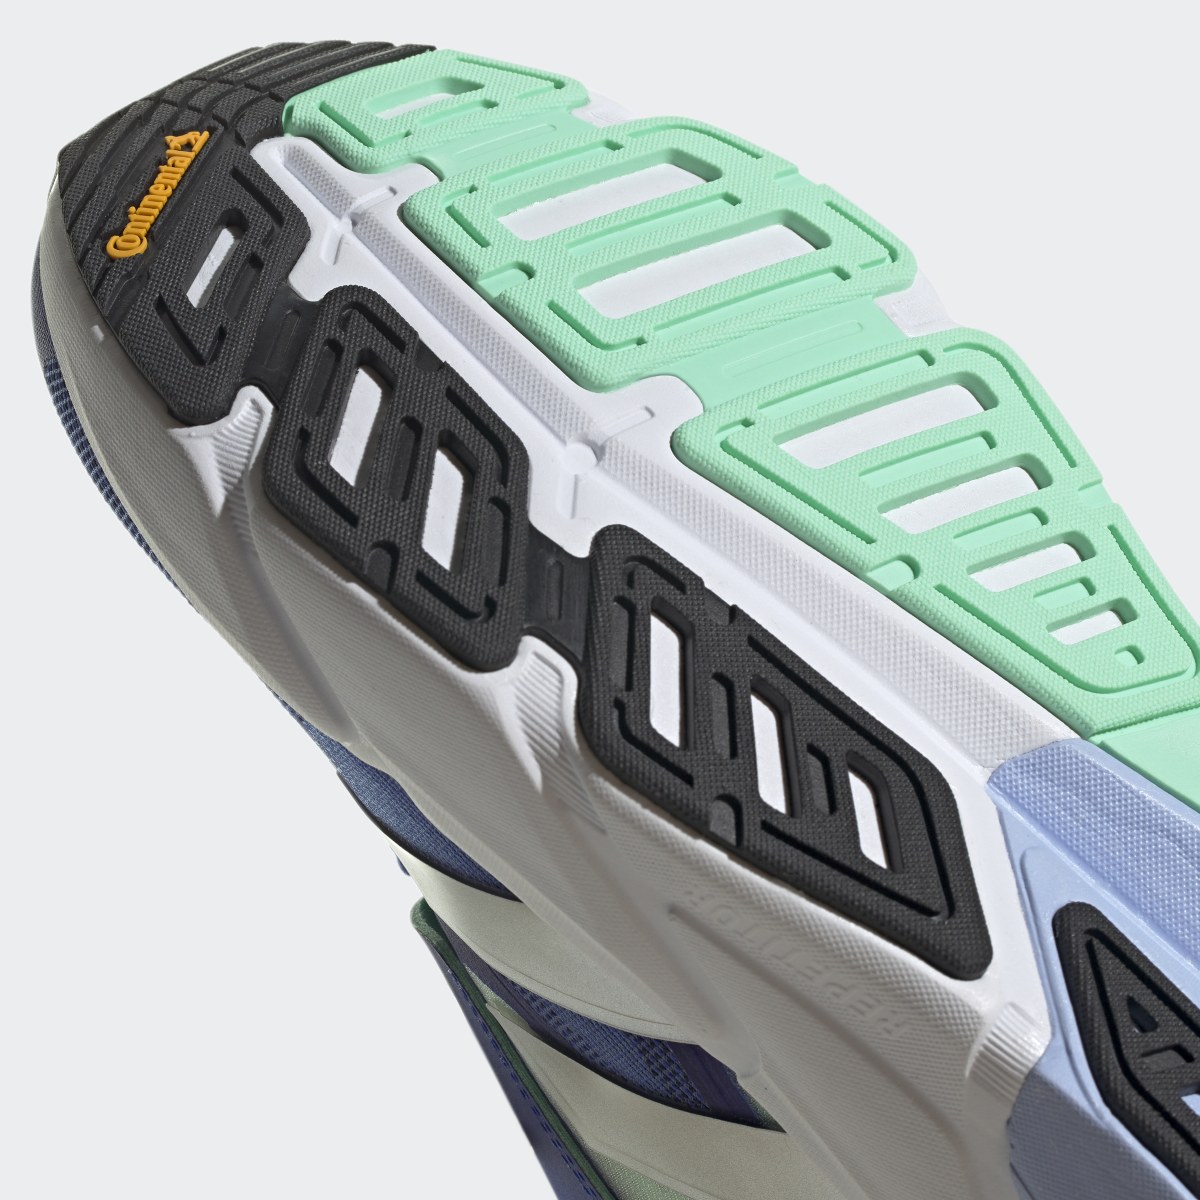 Adidas Scarpe adistar 2.0. 4